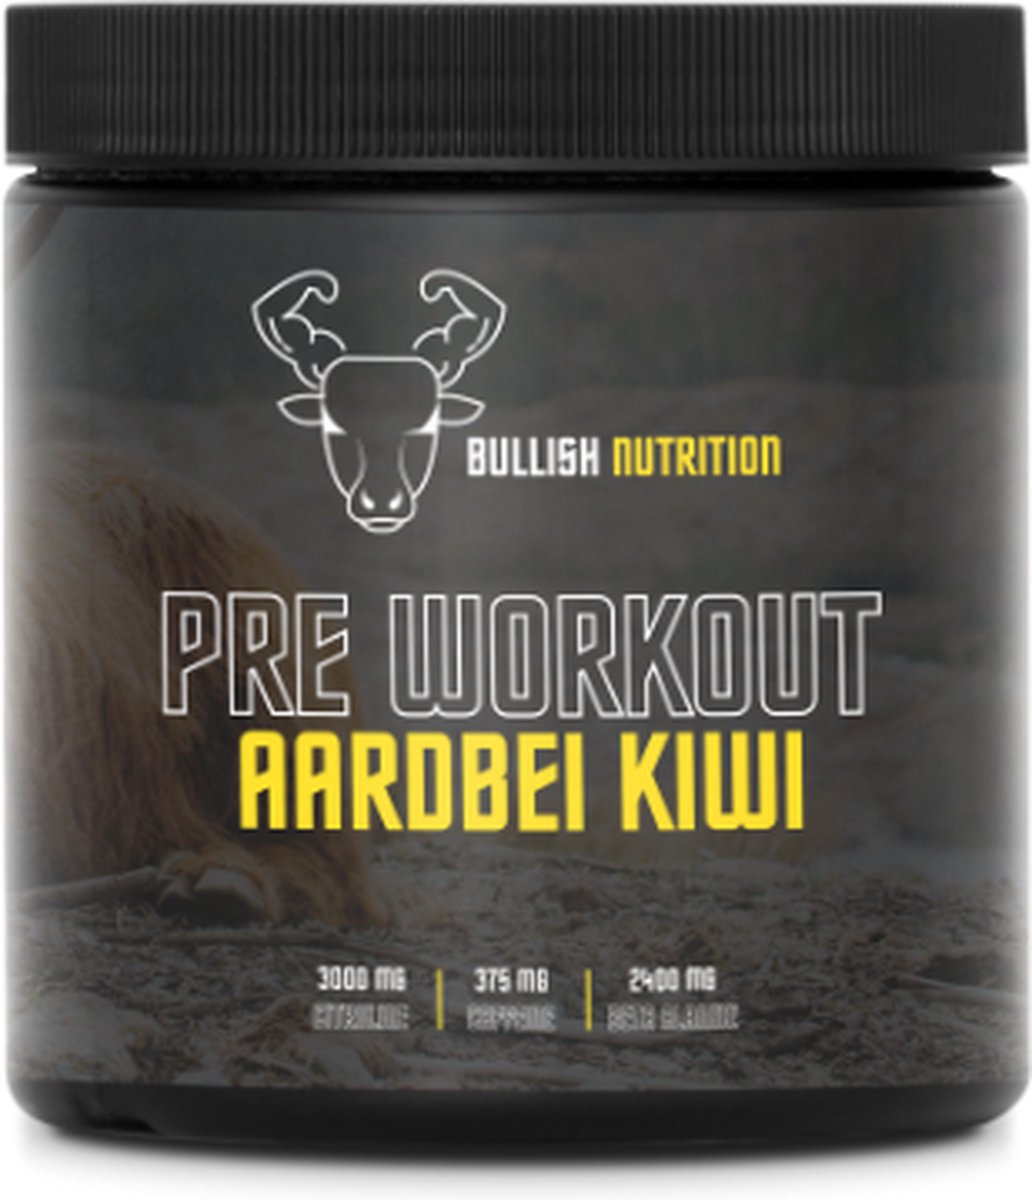 Bullishnutrition - pre workout - aardbei kiwi - pot 300 gram